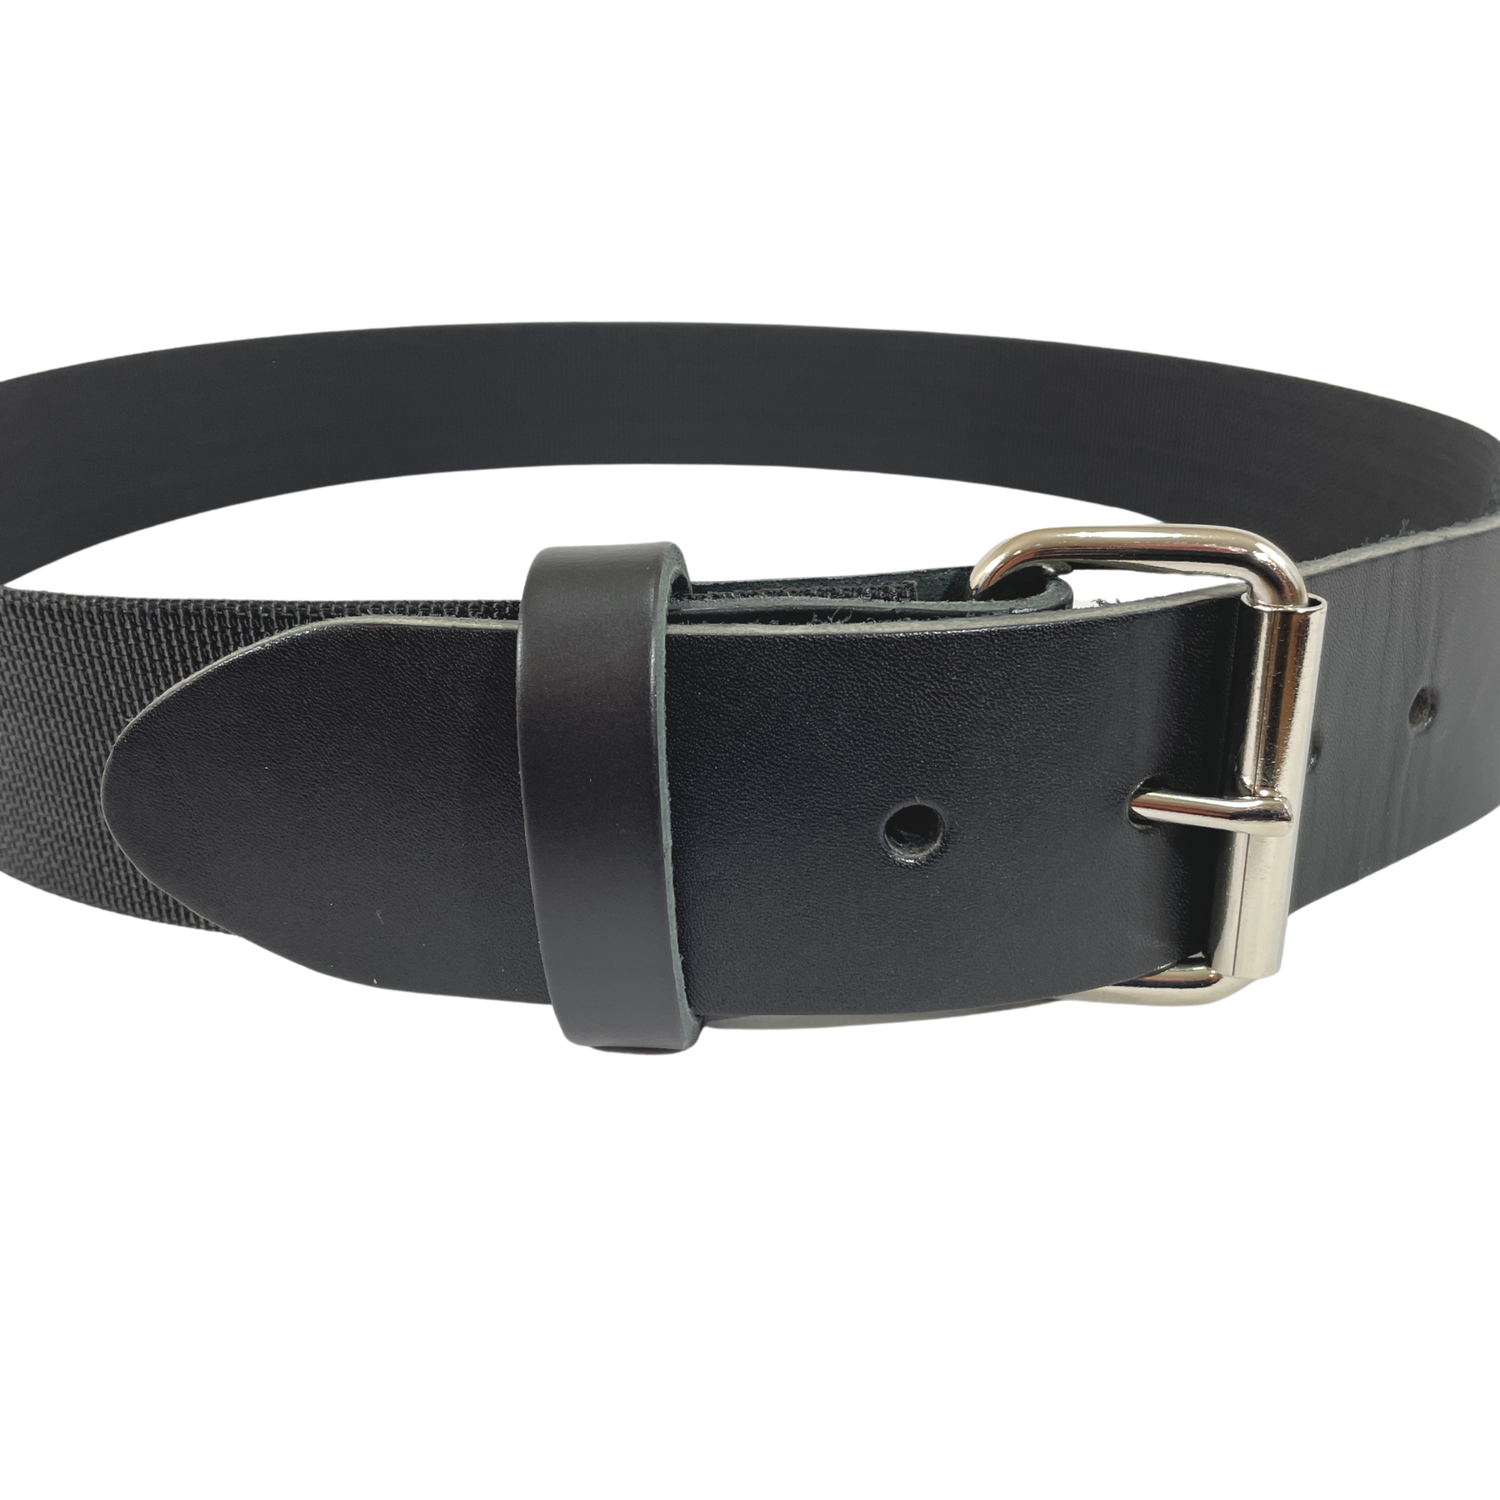 Boulder Bag Nylon Web Belt w/ Leather-tipped Metal Buckle - 514